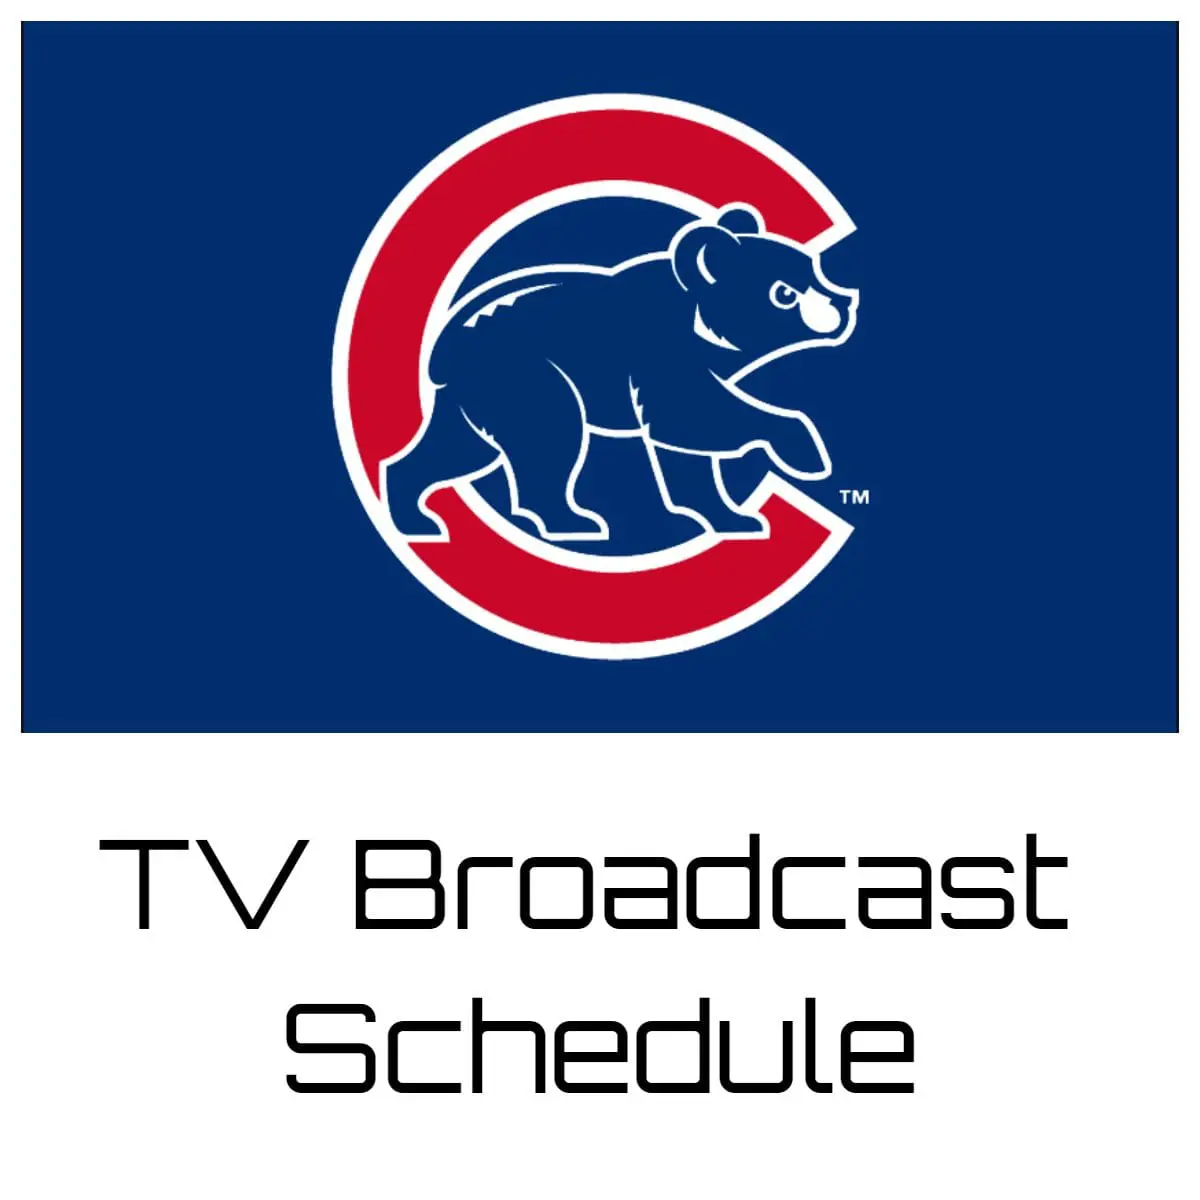 Chicago Cubs TV Broadcast Schedule